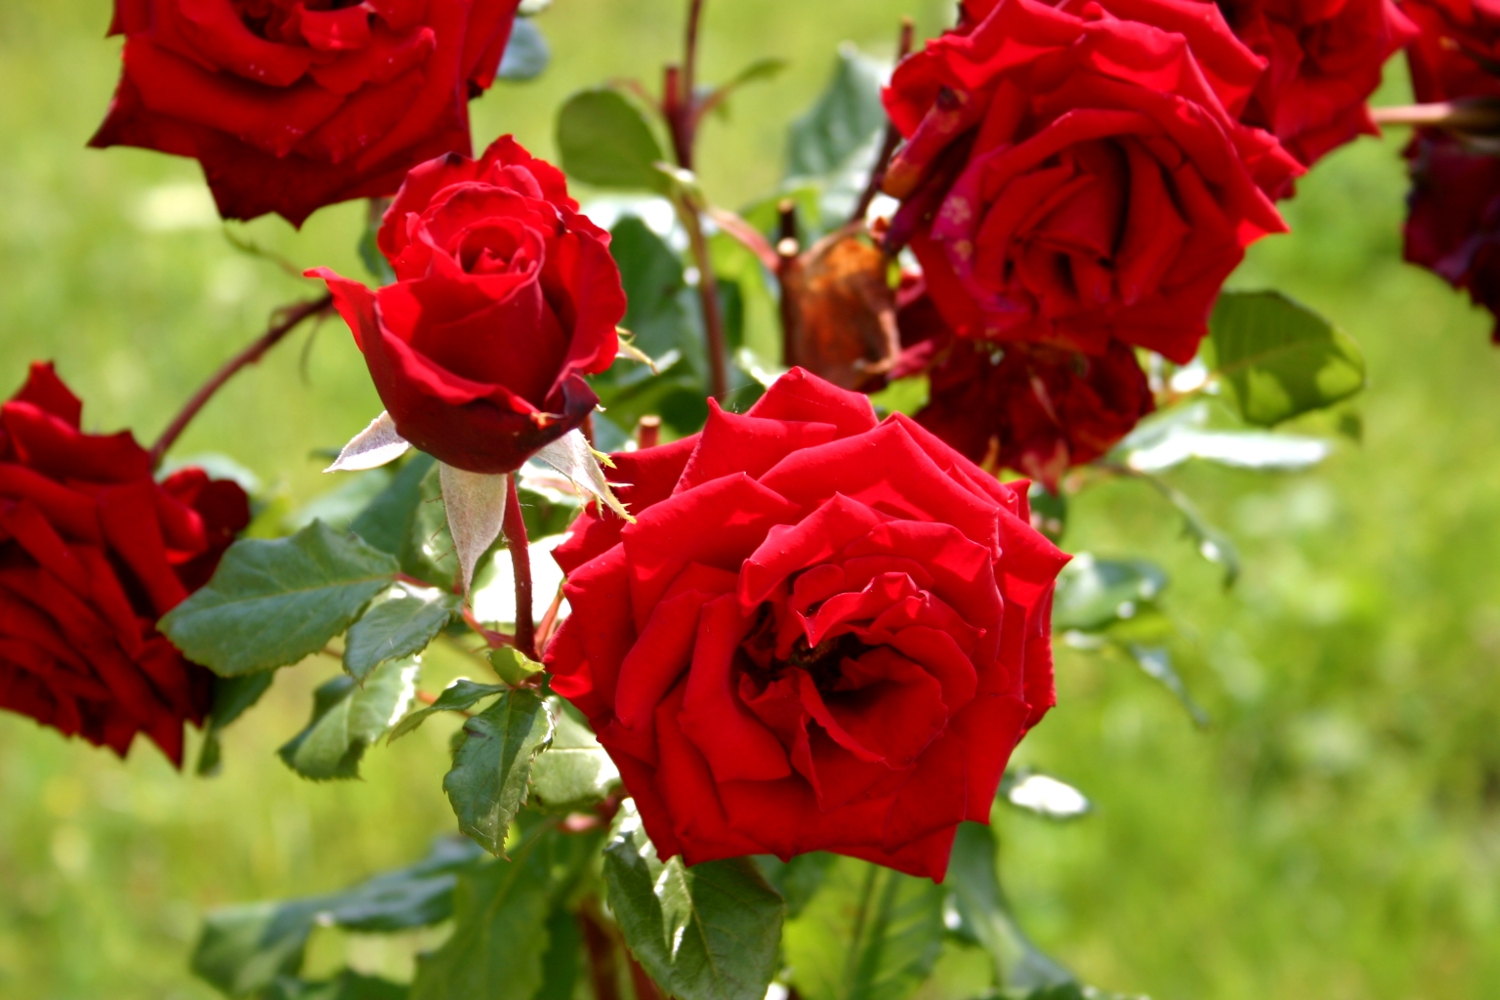 Bran - red roses